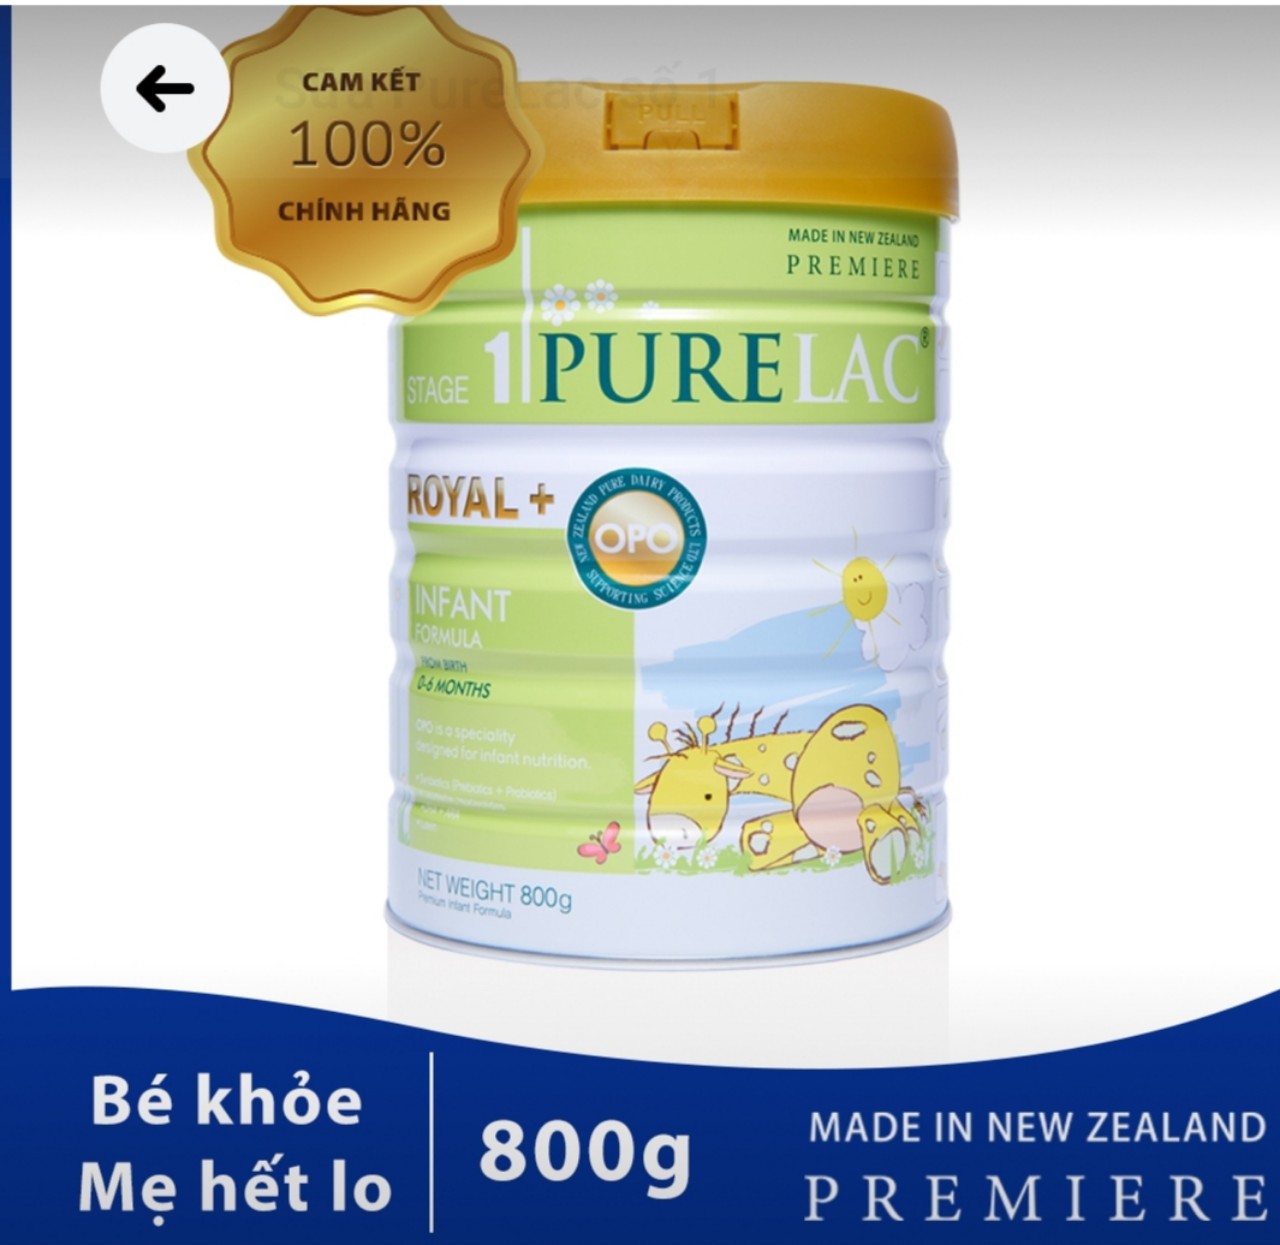 Sữa PureLac nhập khẩu New Zealand cho trẻ 0-6 tháng